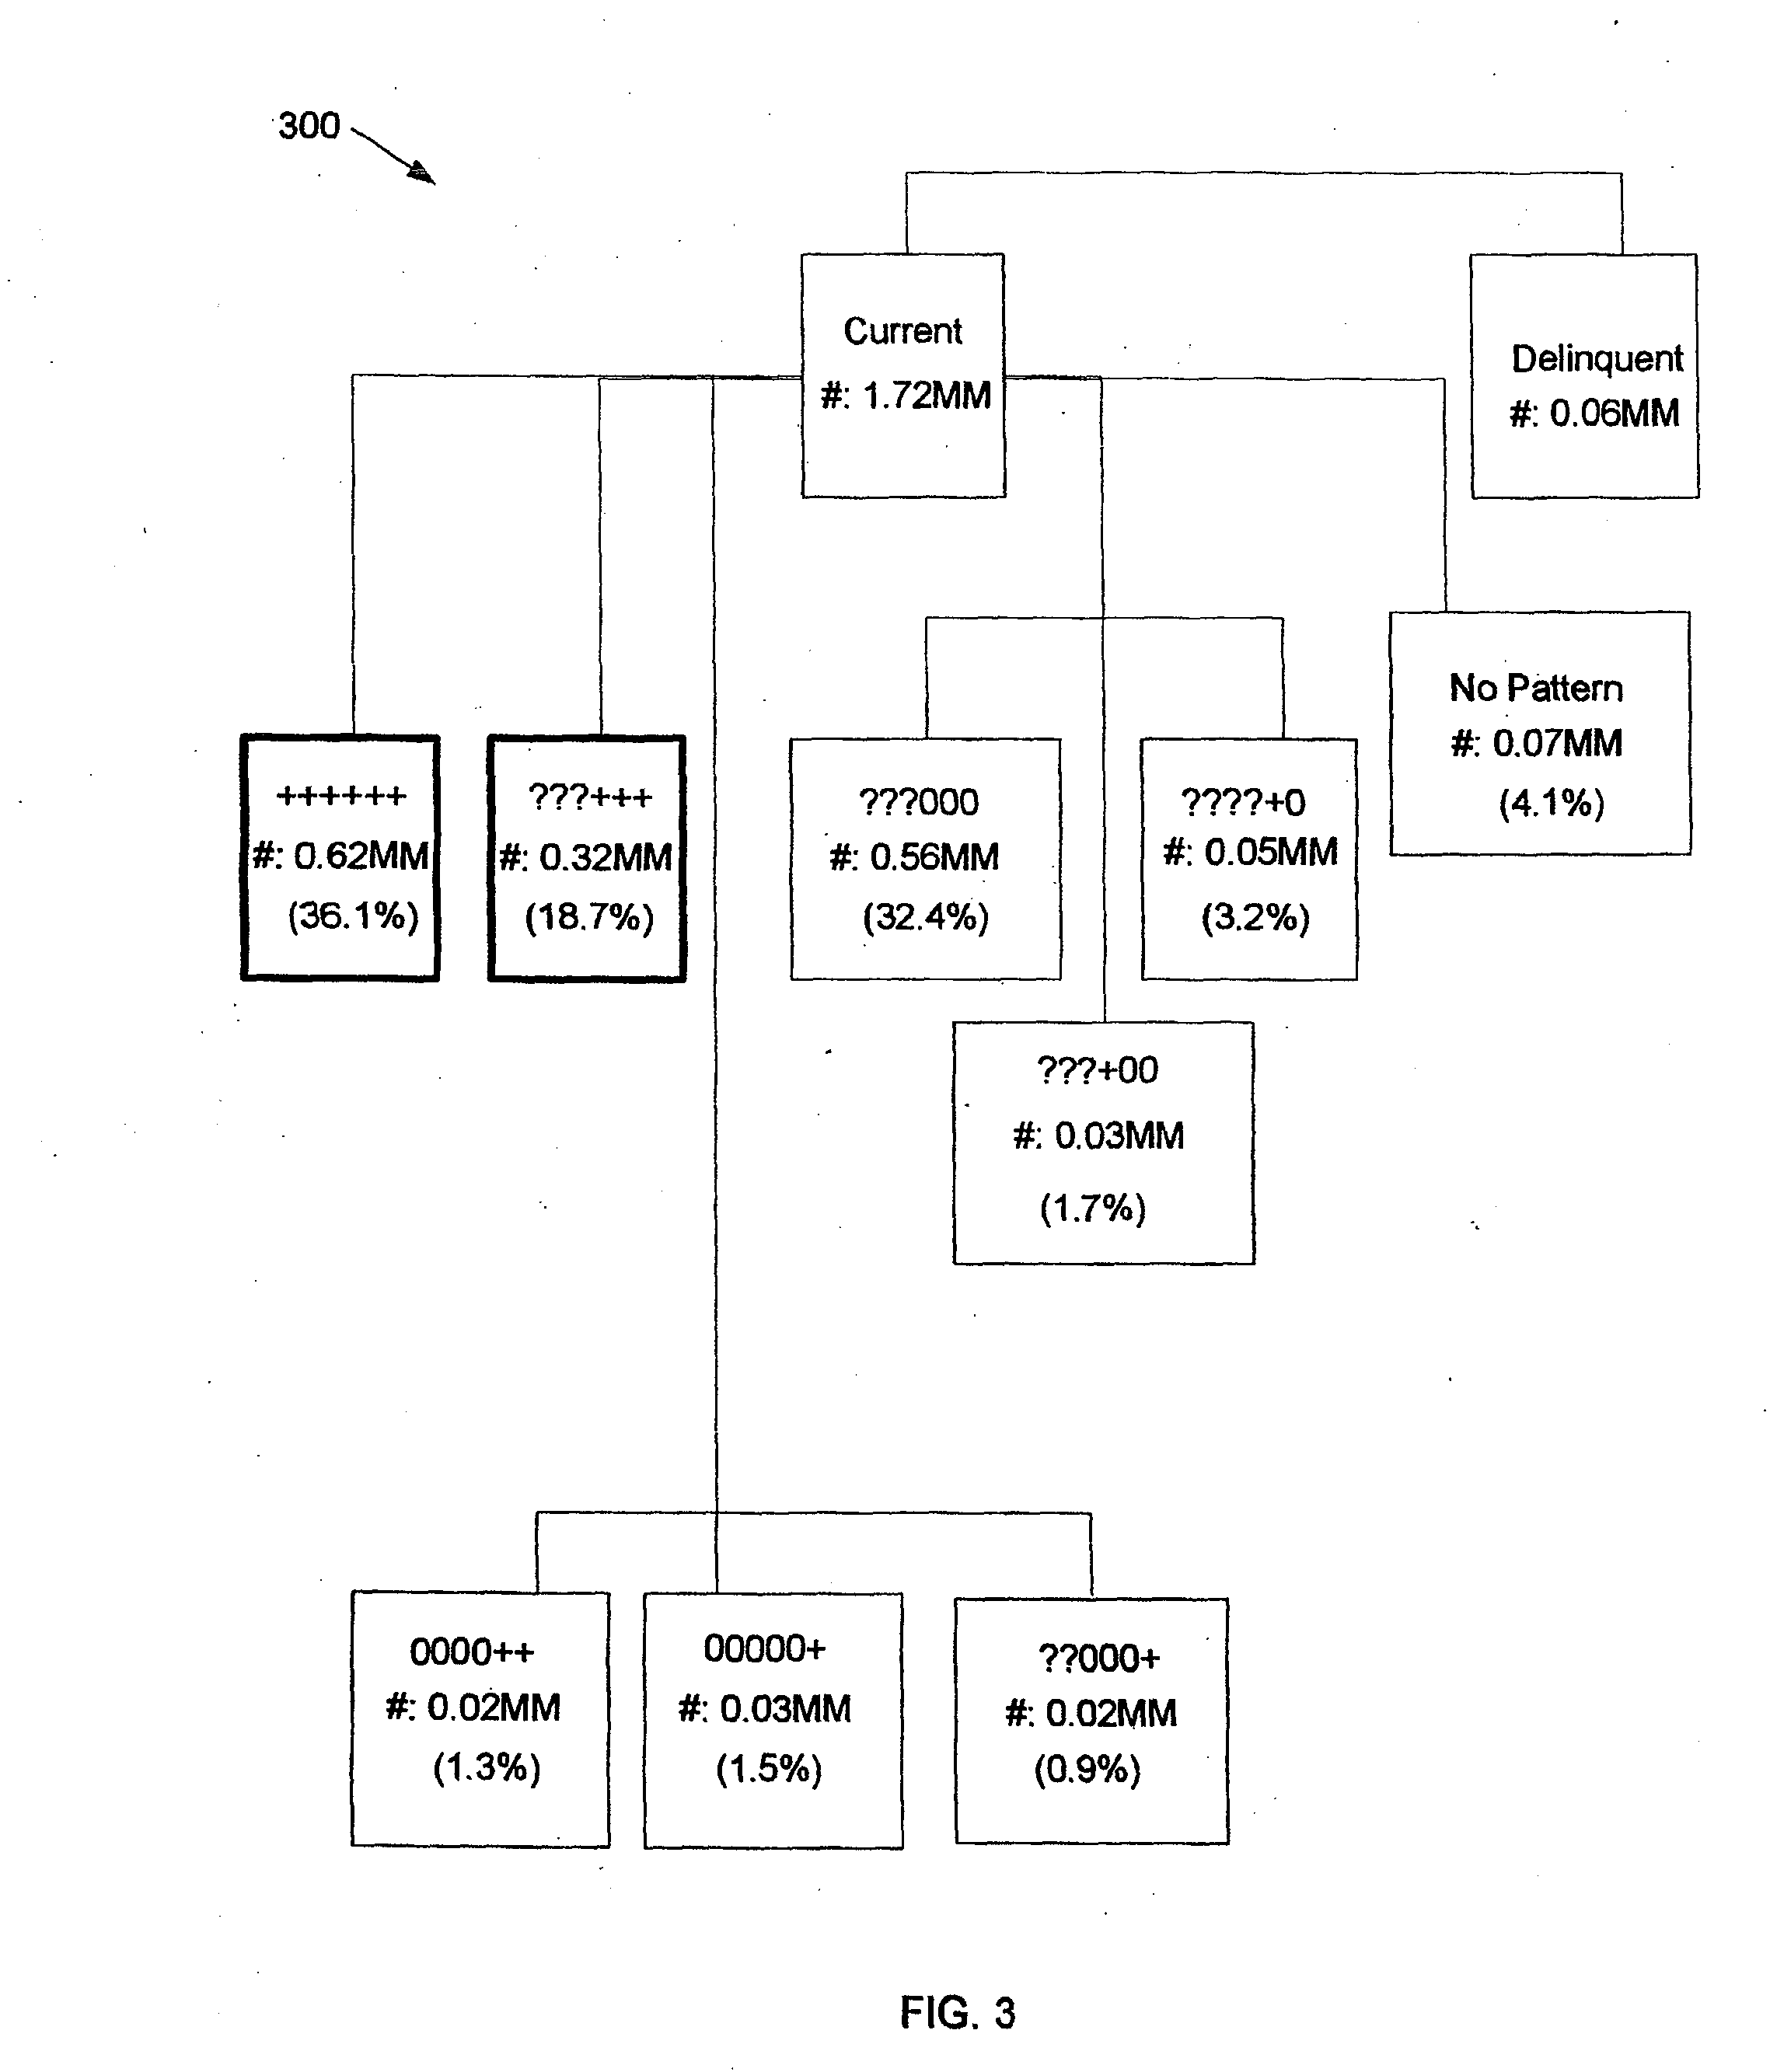 Computer-Based Modeling of Spending Behaviors of Entities